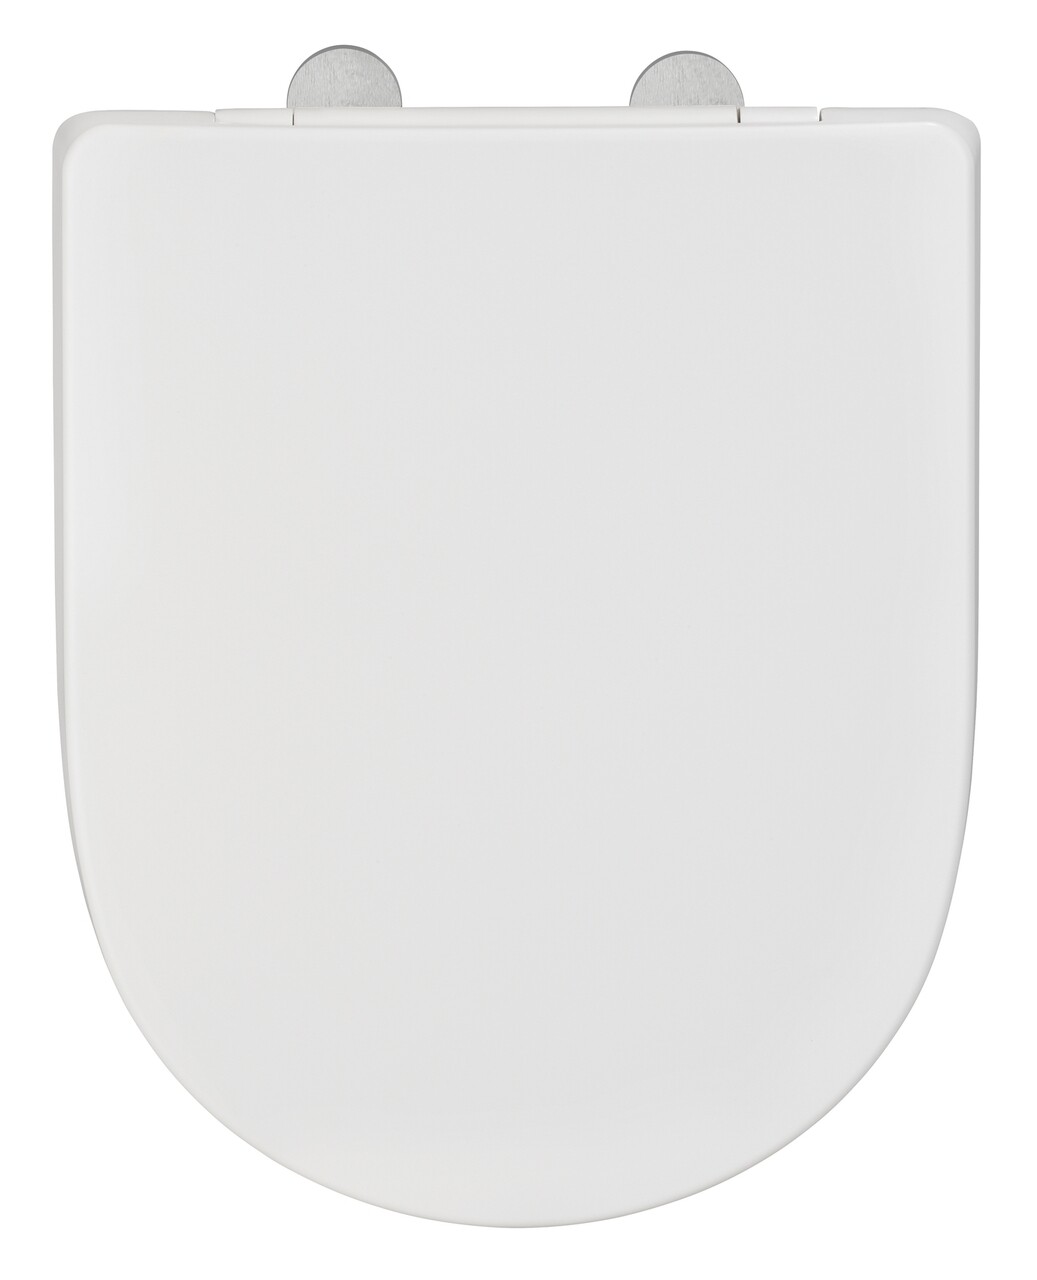 Capac de toaleta, Wenko, Exclusive O.novo, 36.5 x 45 cm, duroplast, alb